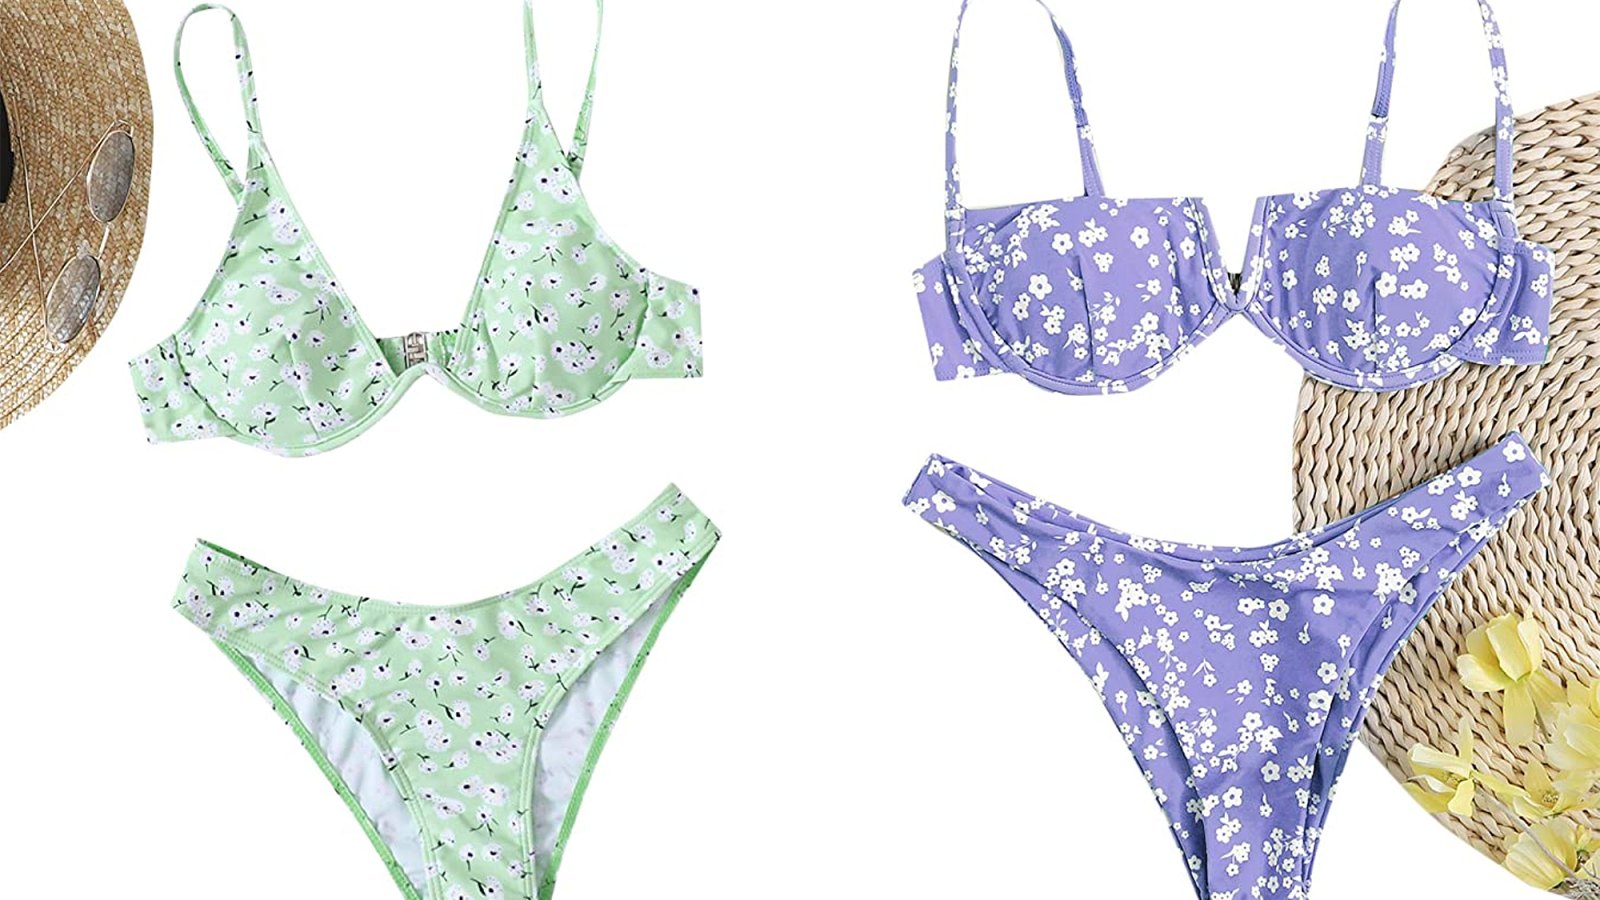 SweatyRocks Women's Sexy Spaghetti Strap Floral Bikini Set Underwire Swimsuit